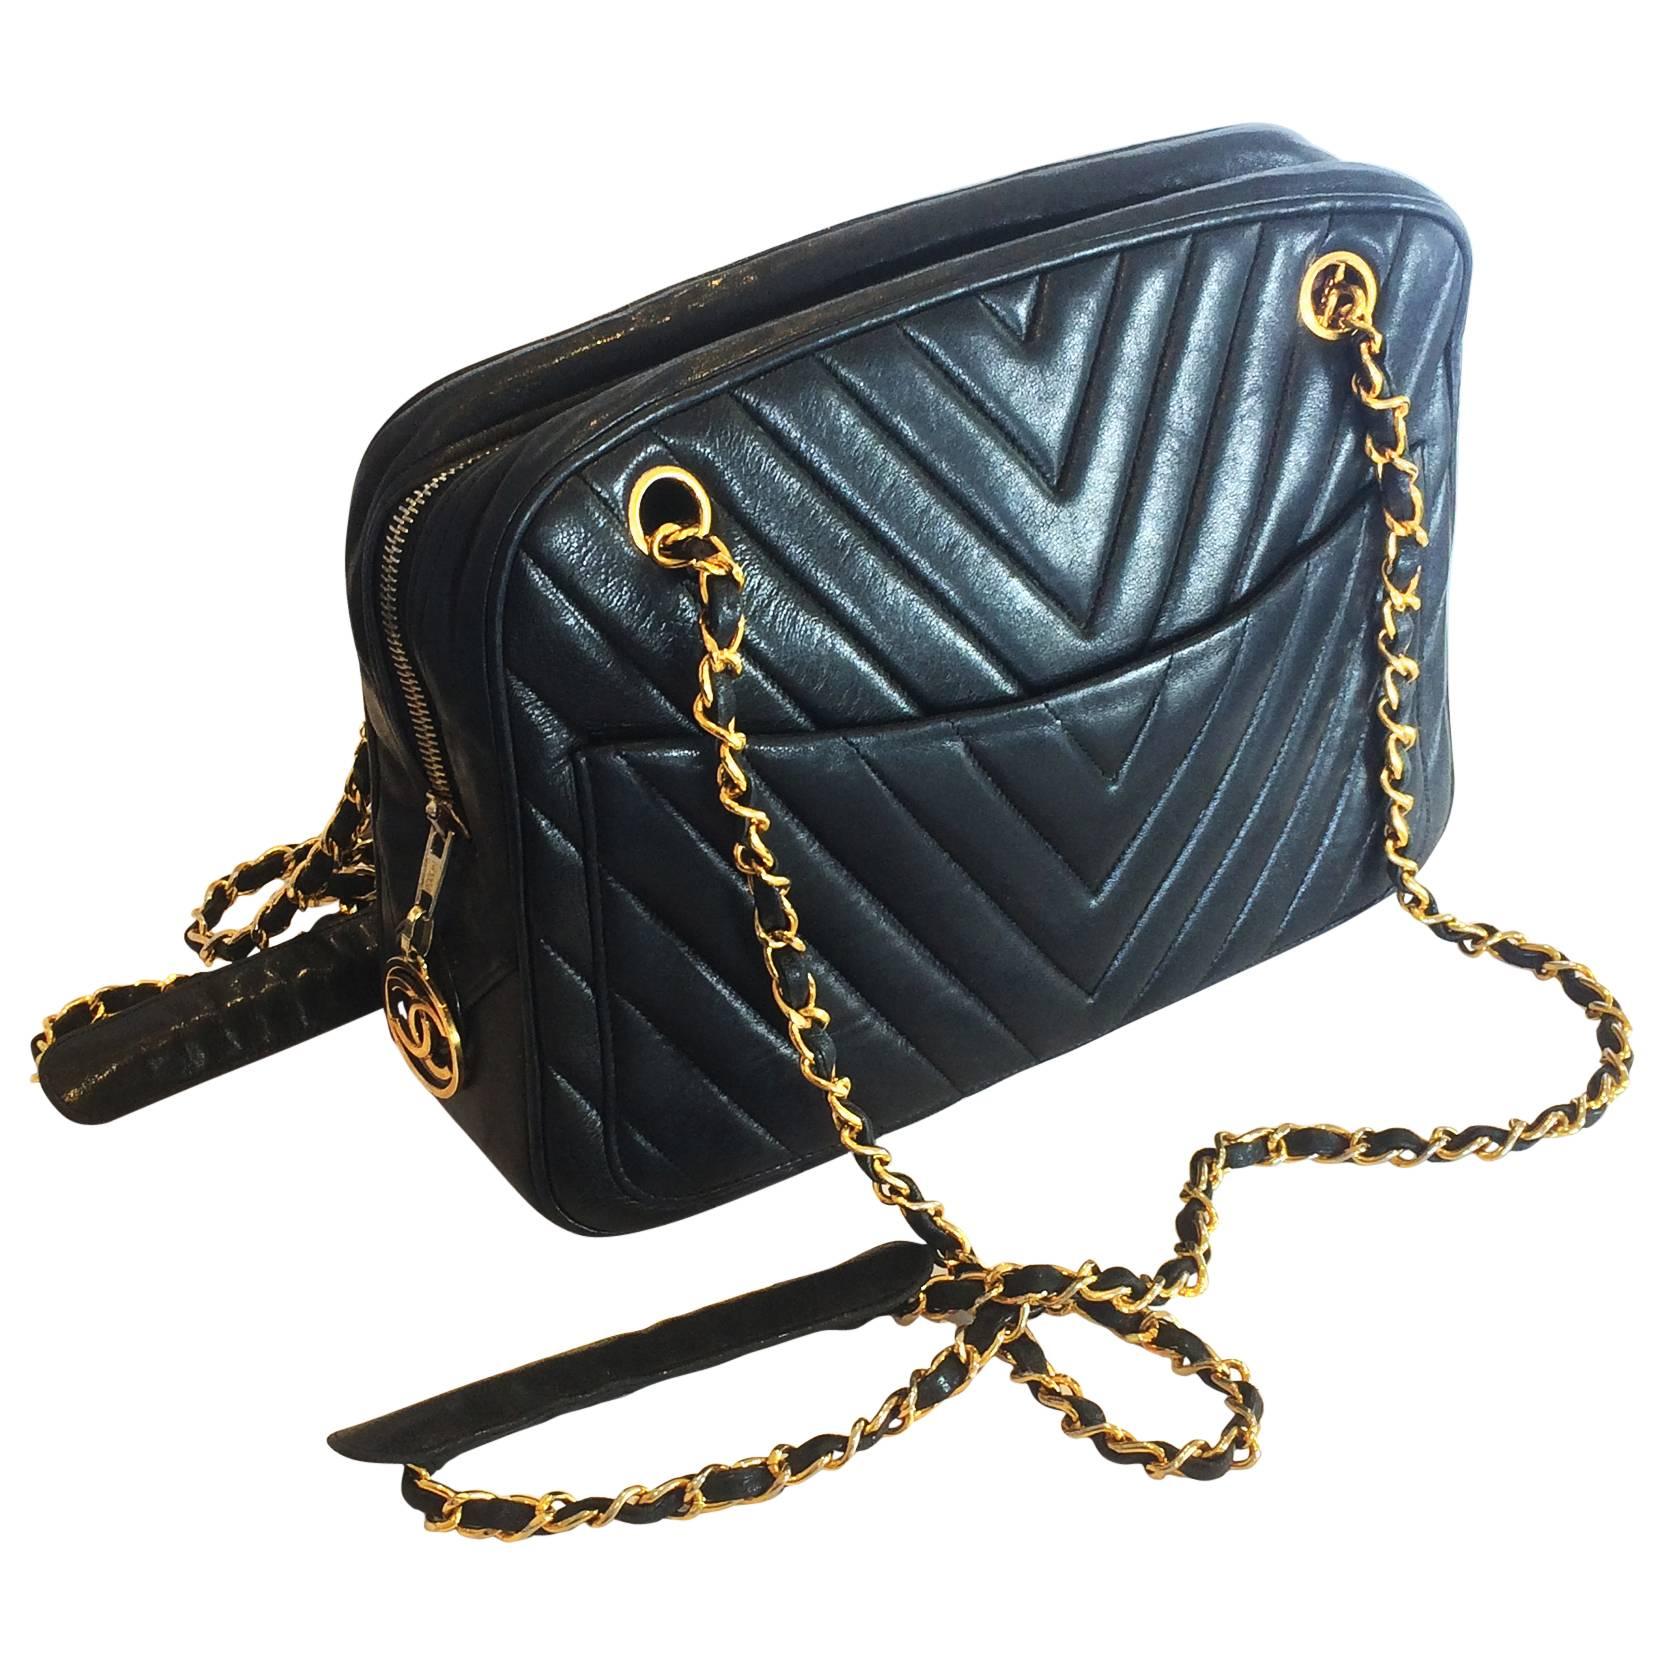 Authentic Chanel Black V Stitch Handbag Bag